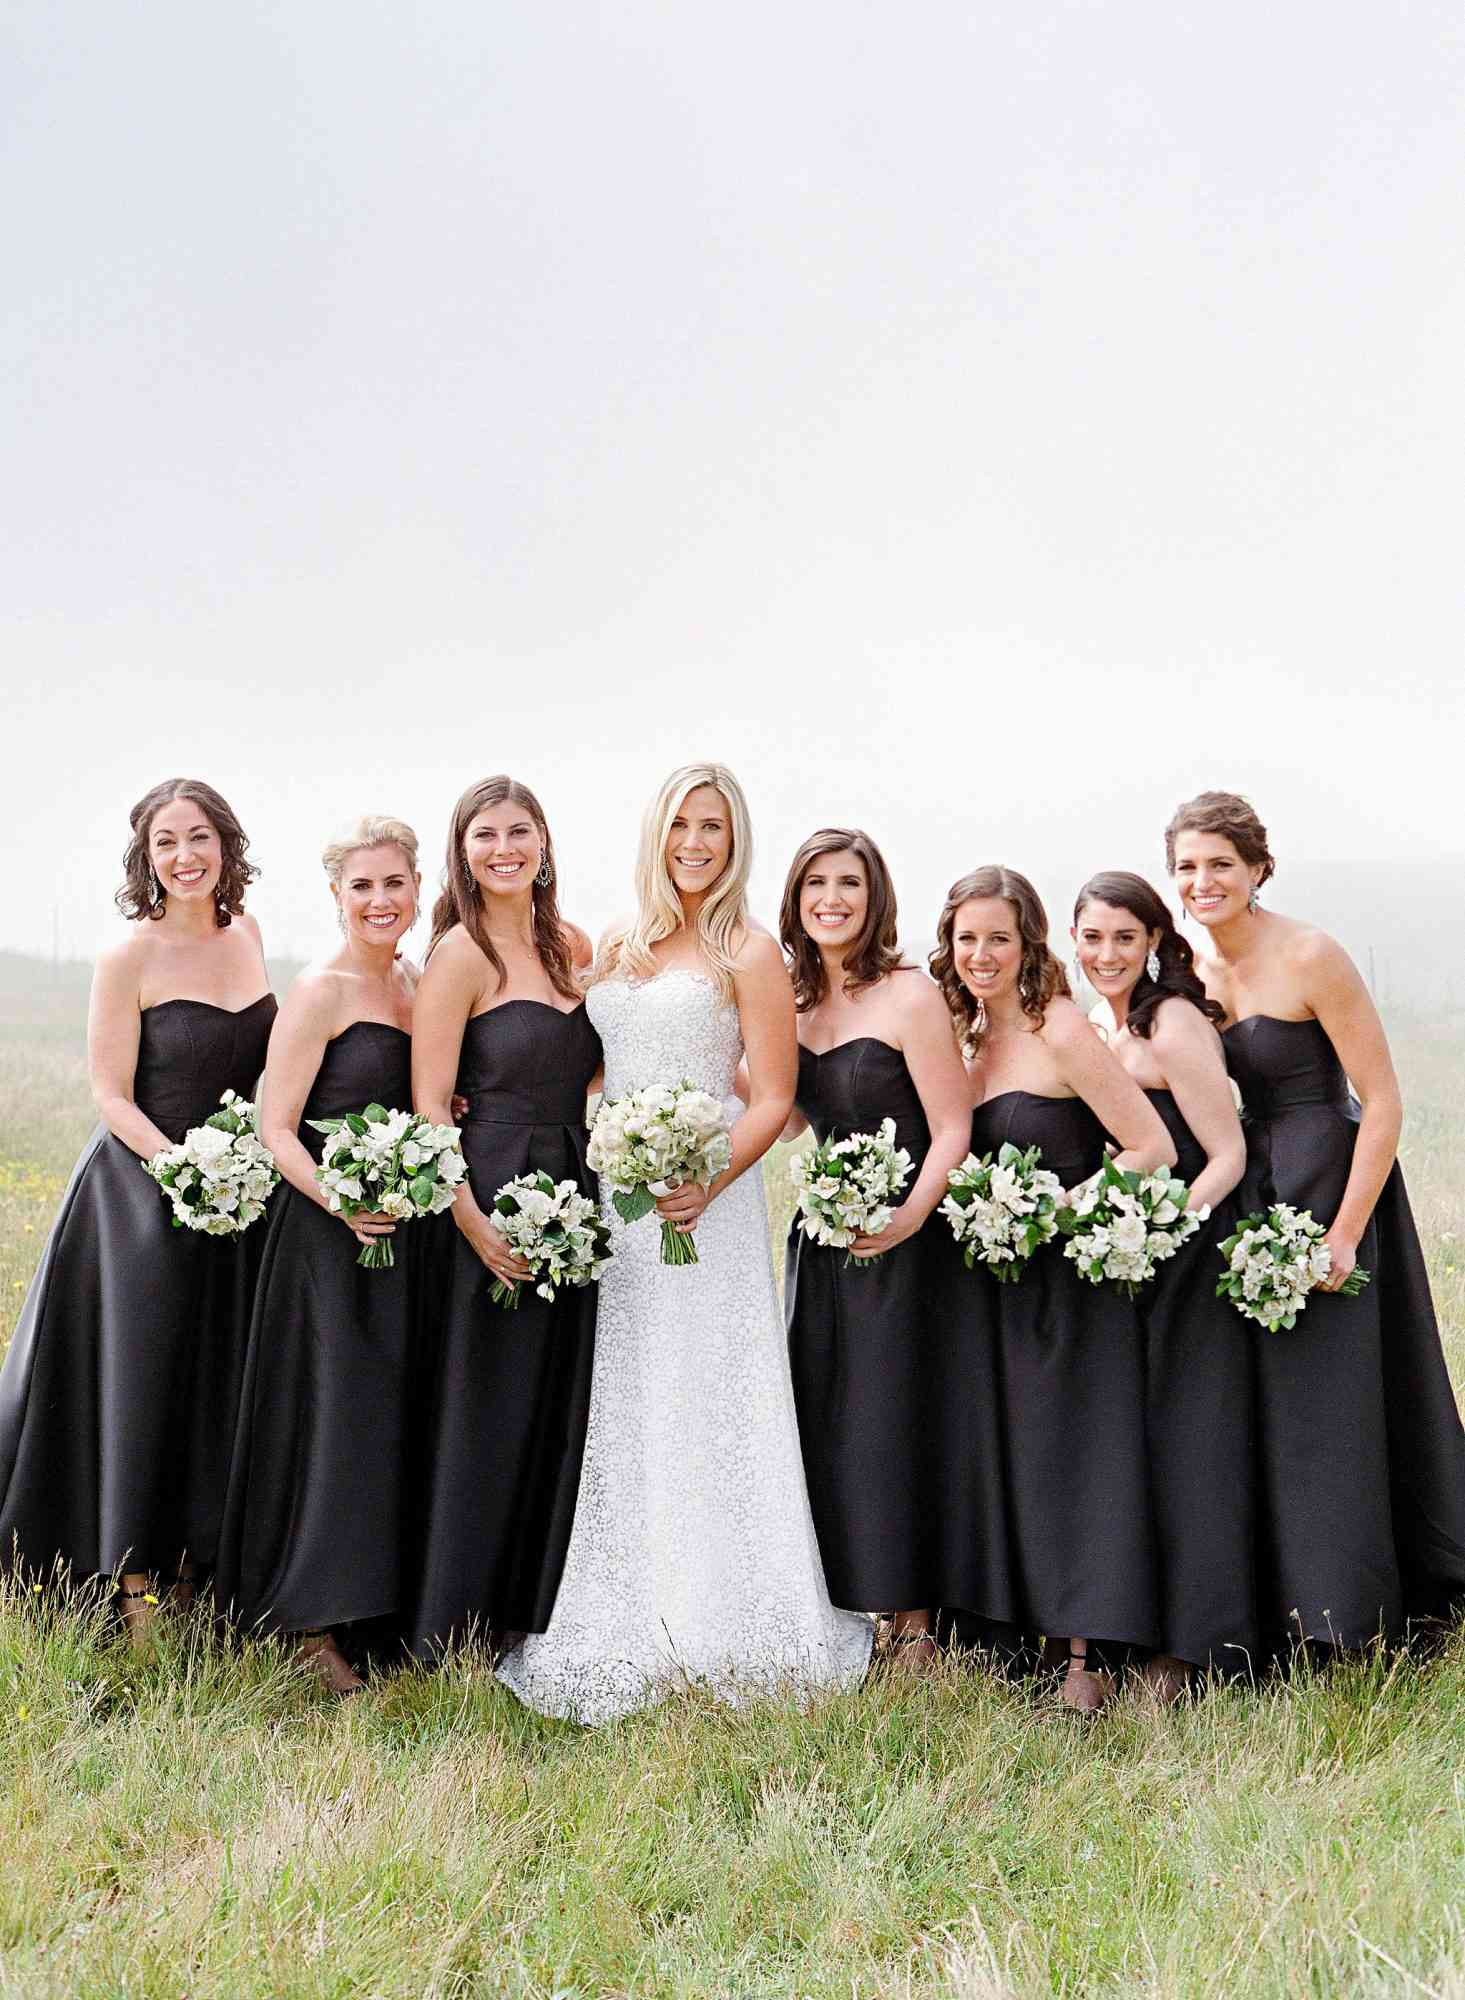 whitney zach wedding bridesmaids black strapless dresses